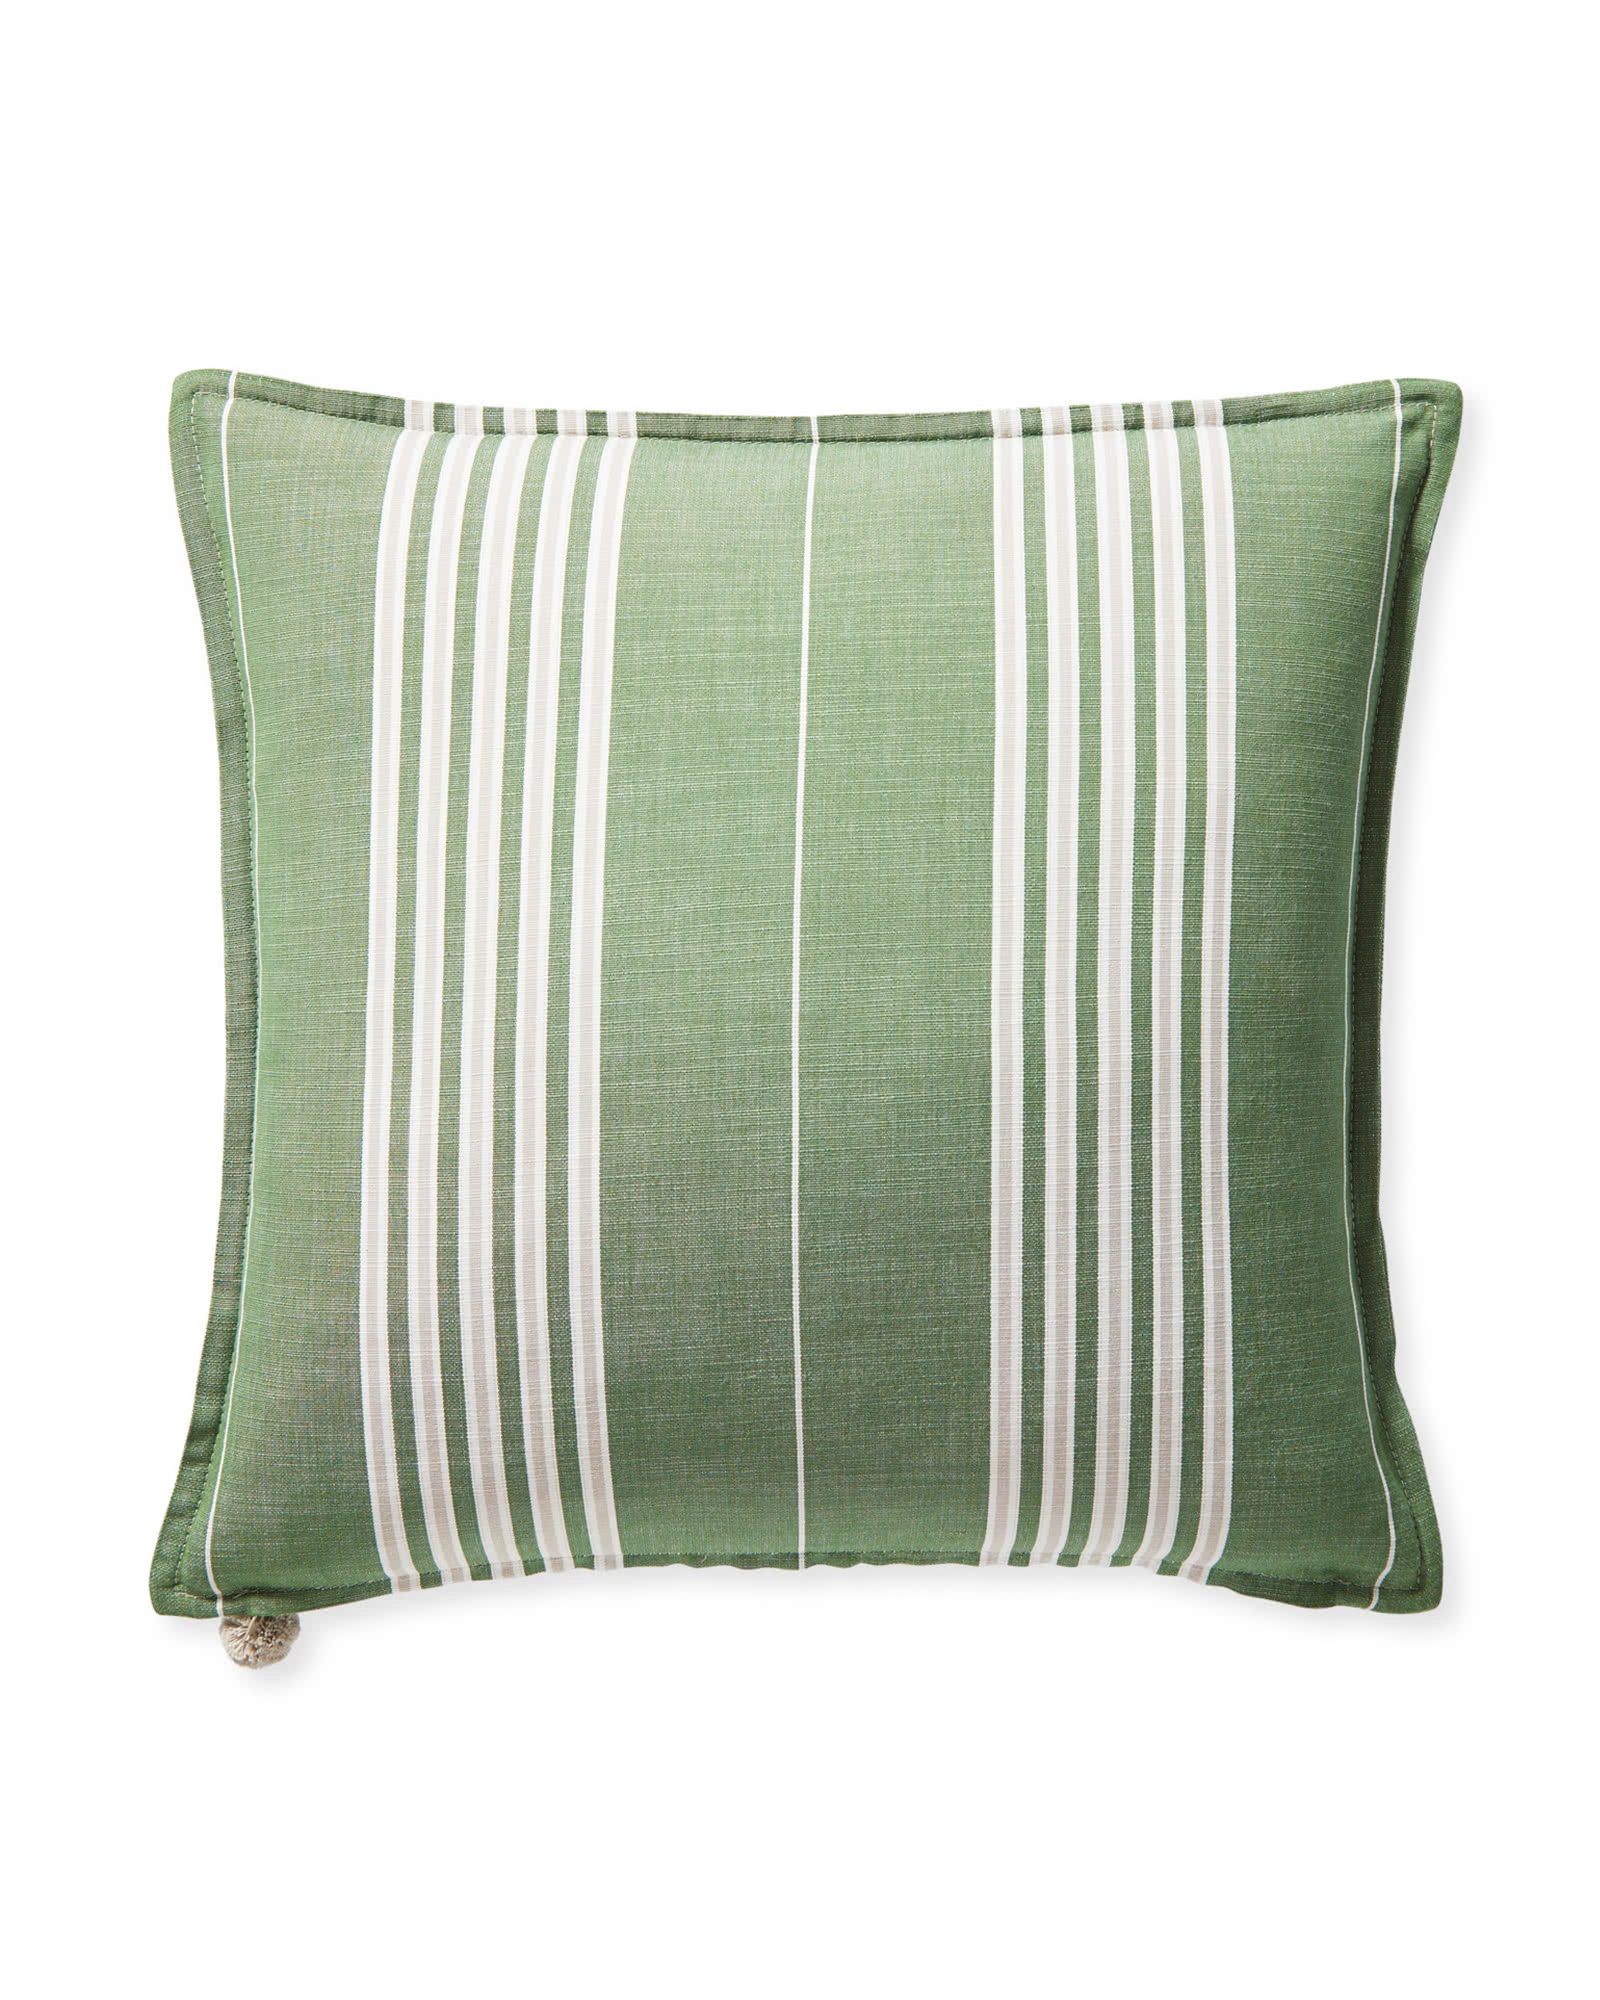 Perennials® Lake Stripe Pillow Cover, 22" square - Image 0